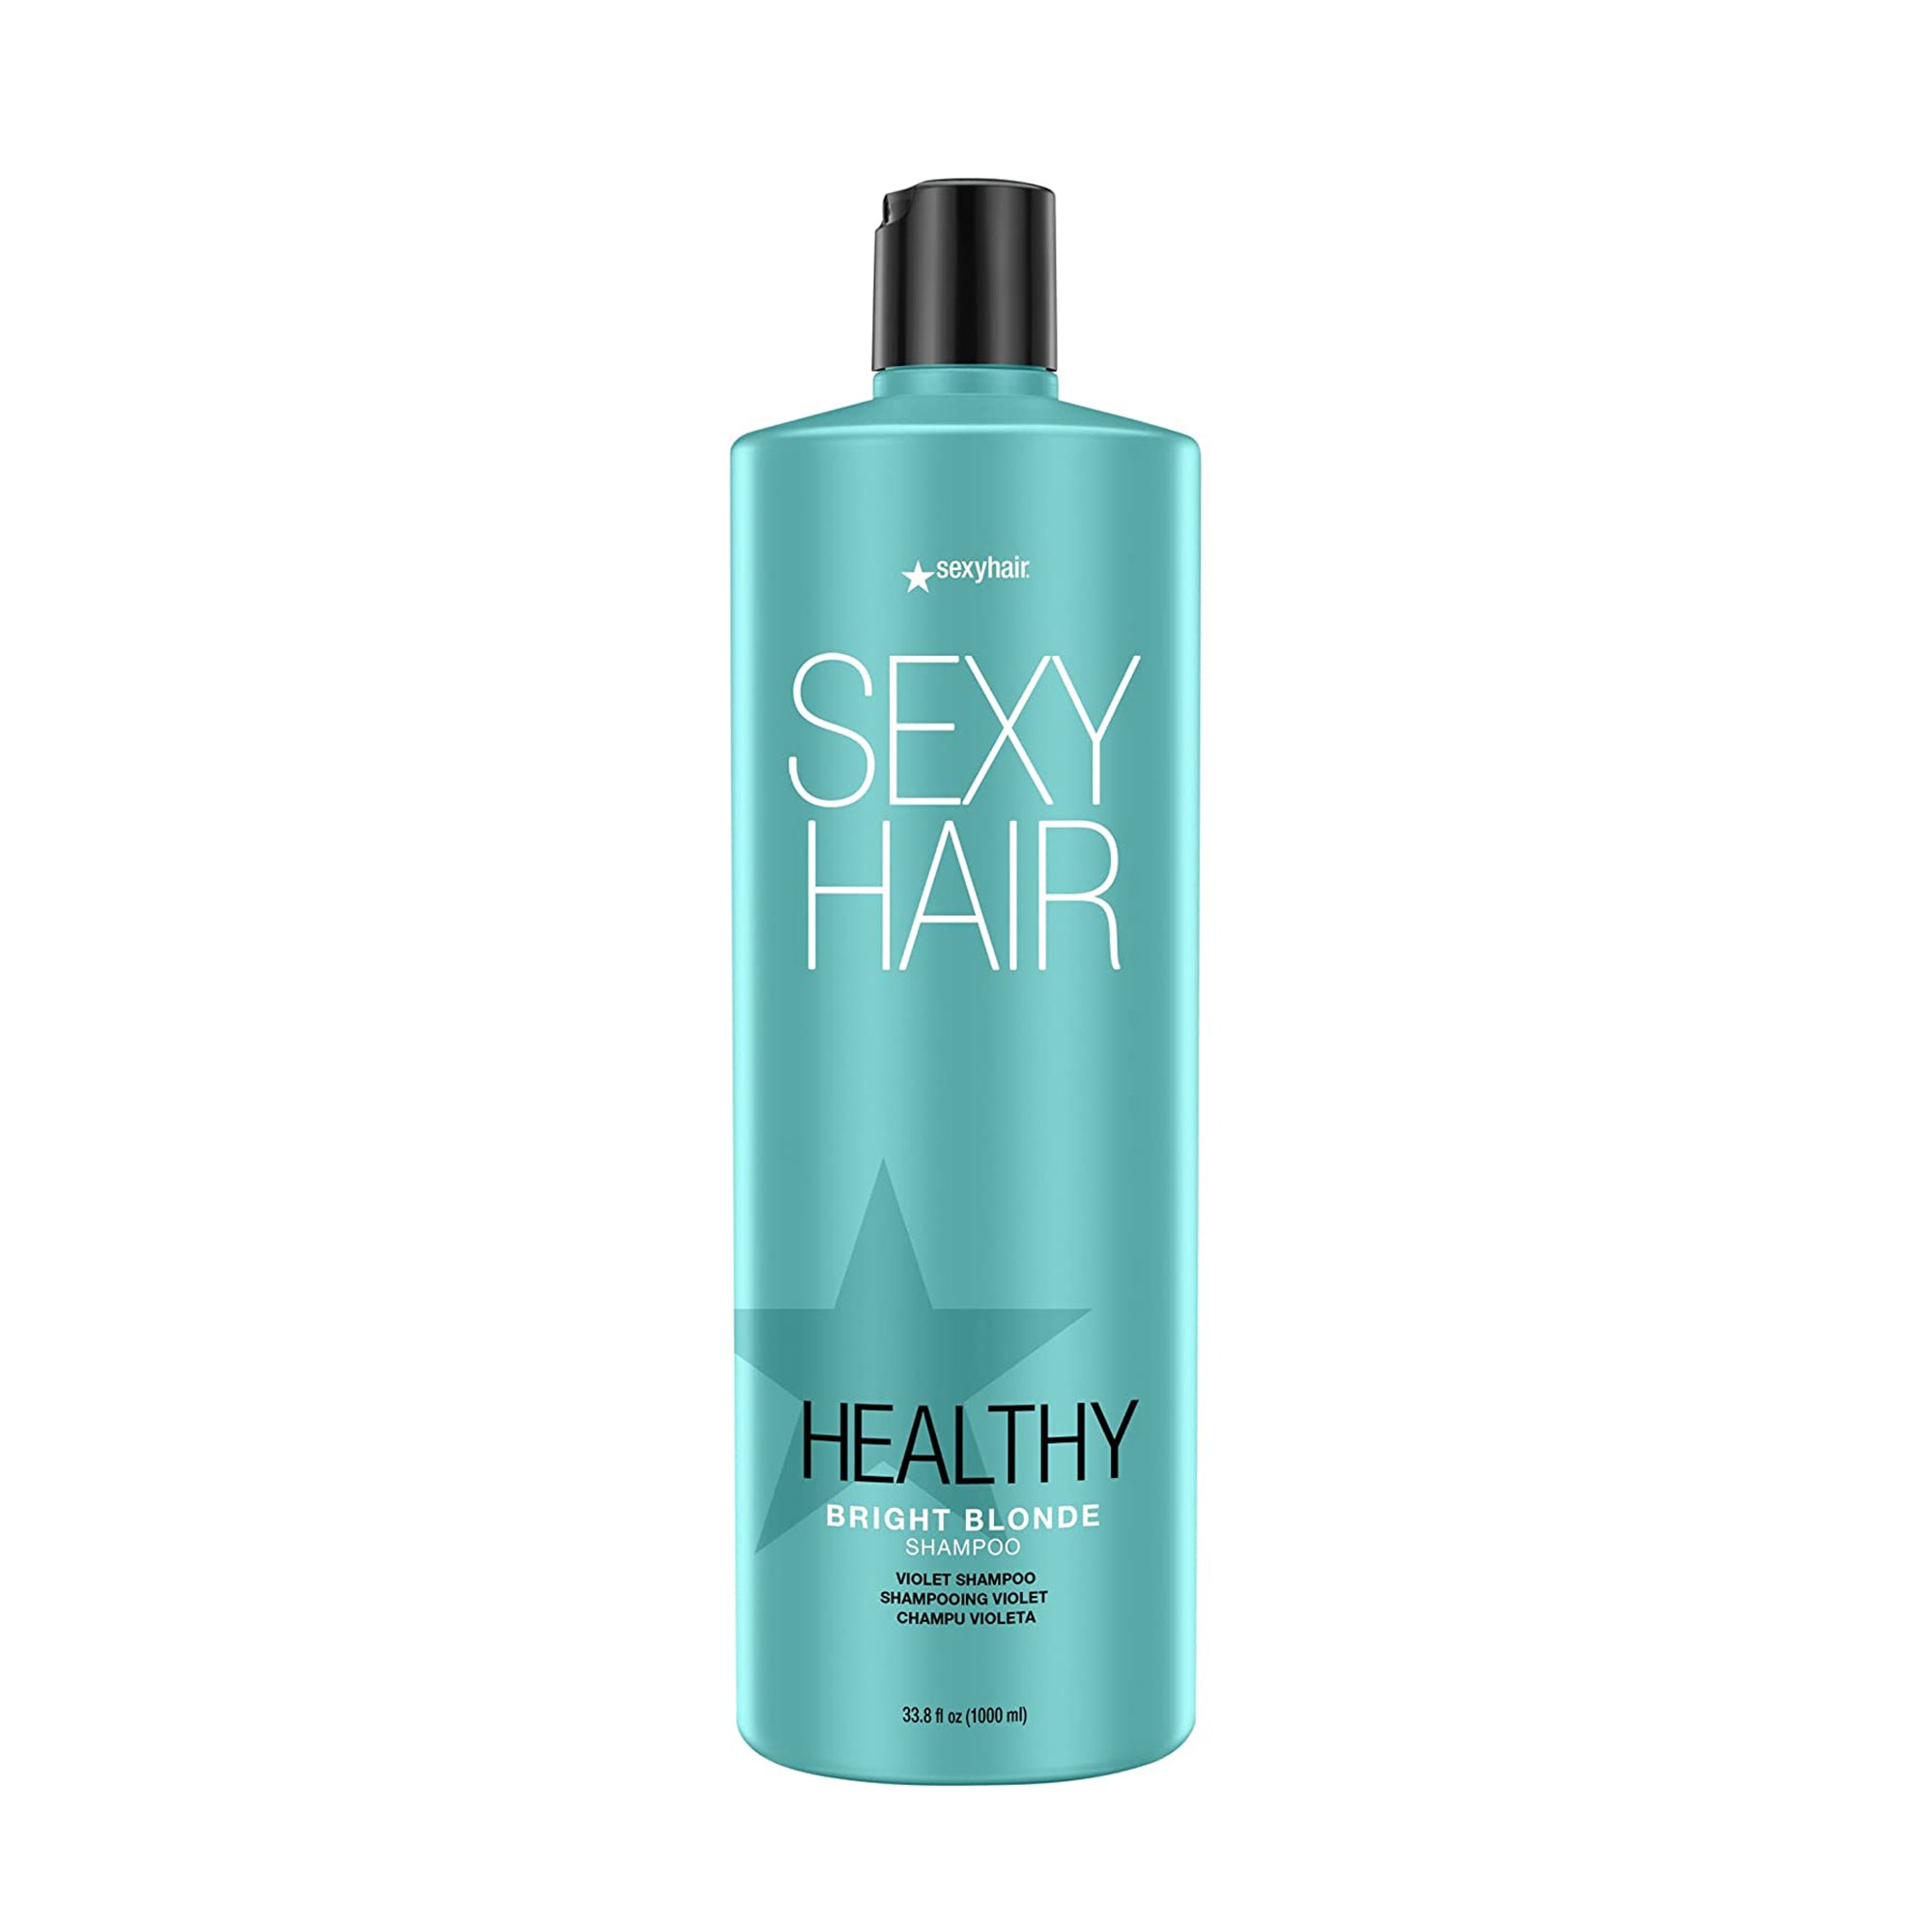 Sexy Hair Healthy SexyHair Bright Blonde Shampoo / 33.8